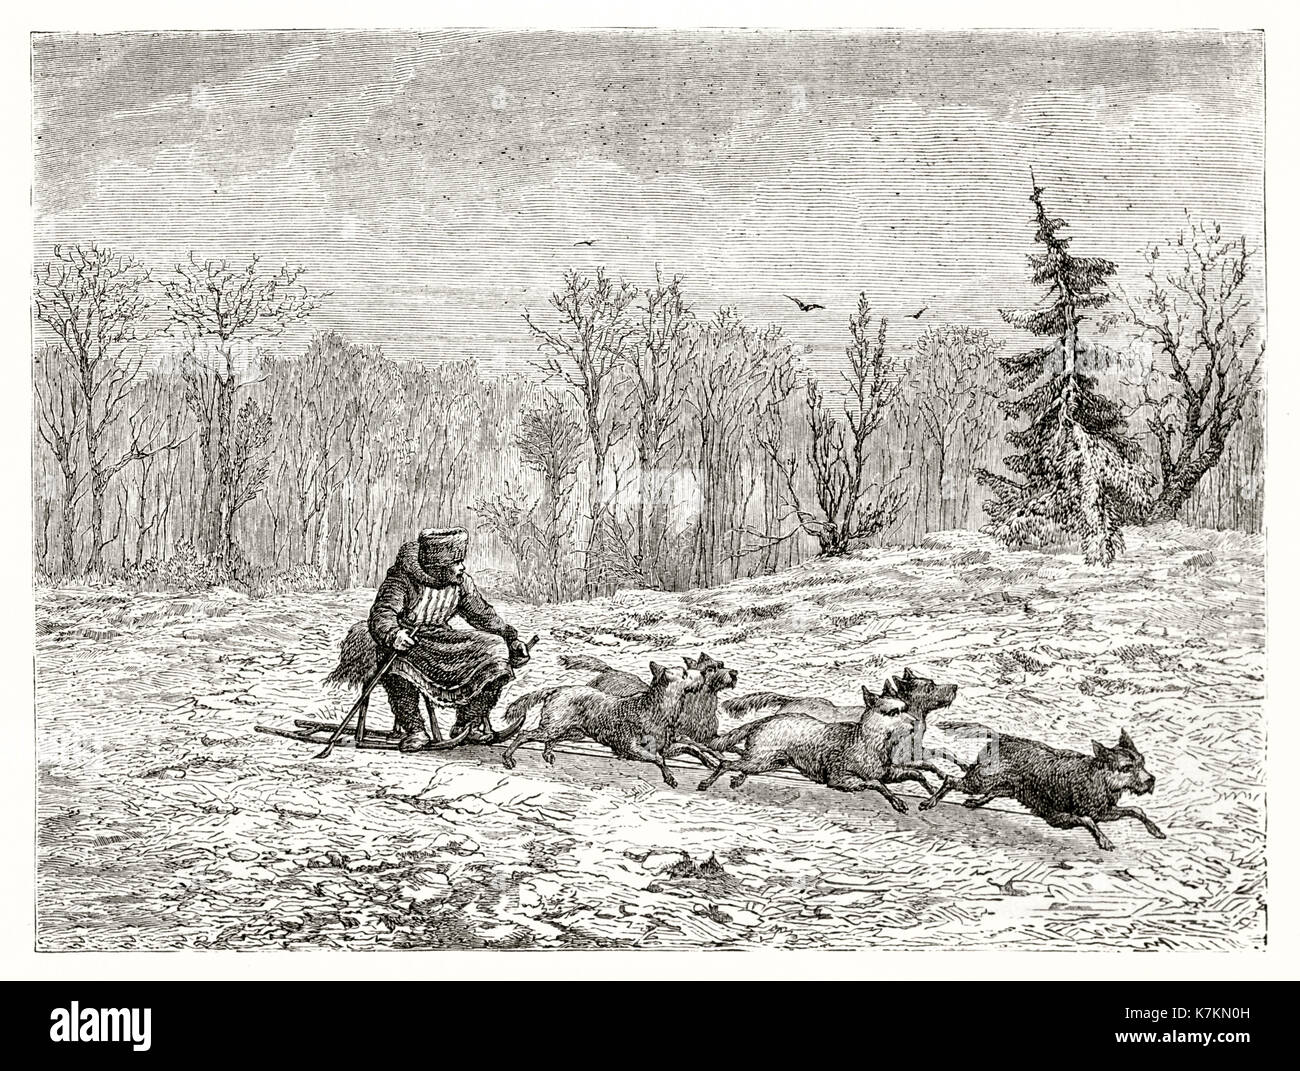 Vecchia illustrazione di slitte trainate da cani. Da Gauchard, publ. in Le Tour du Monde, Parigi, 1862 Foto Stock